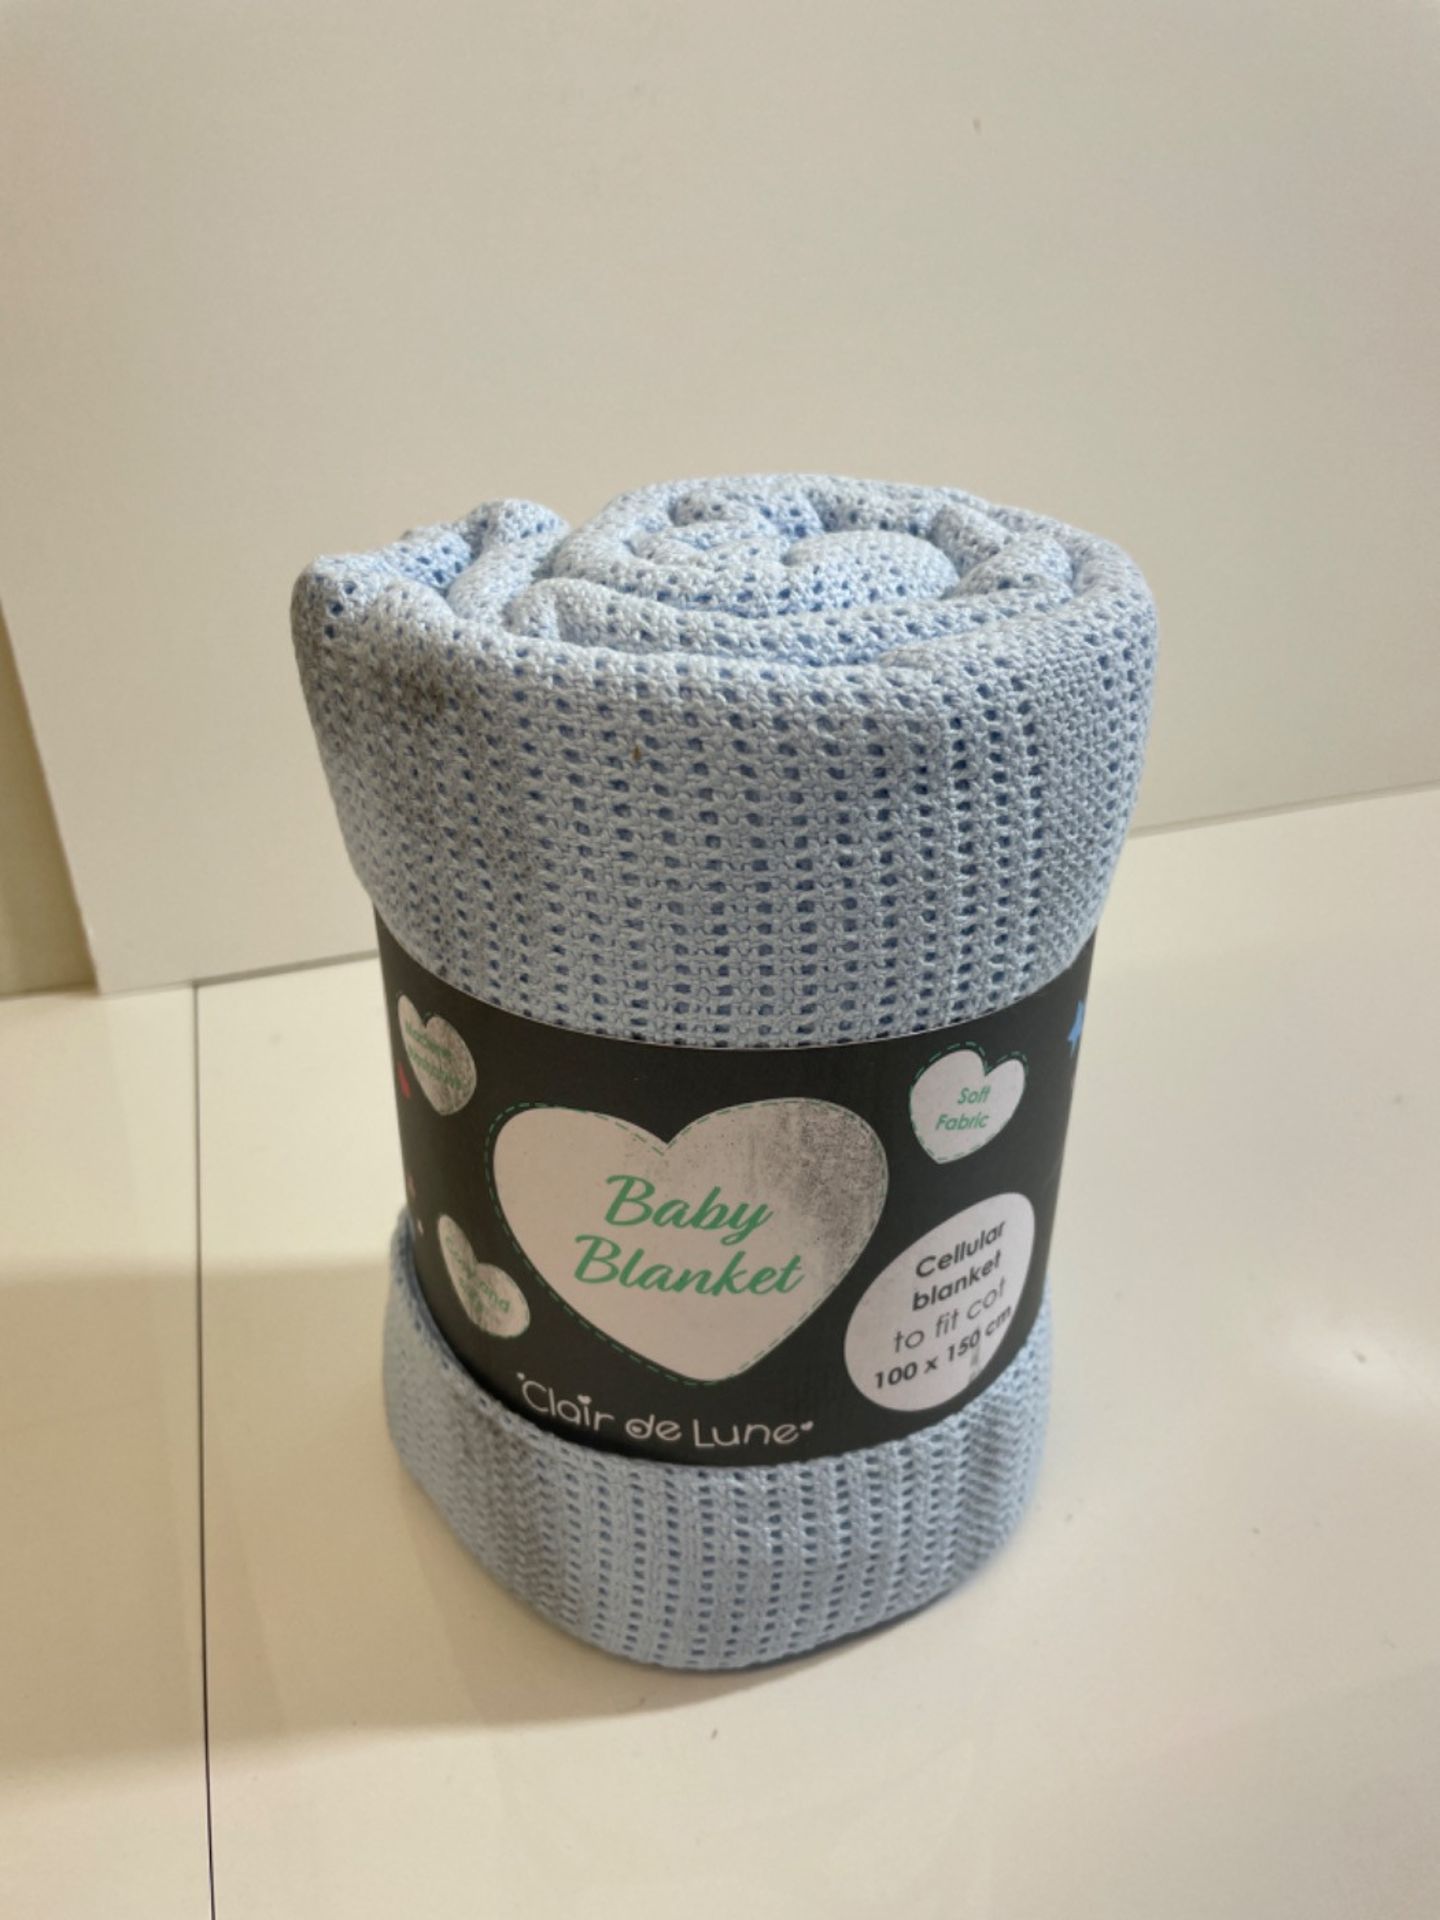 Clair de Lune Cellular Baby Blanket 100% Soft Breathable Cotton, Cot/Cot Bed (100 x 150 cm) Blue - Image 2 of 3